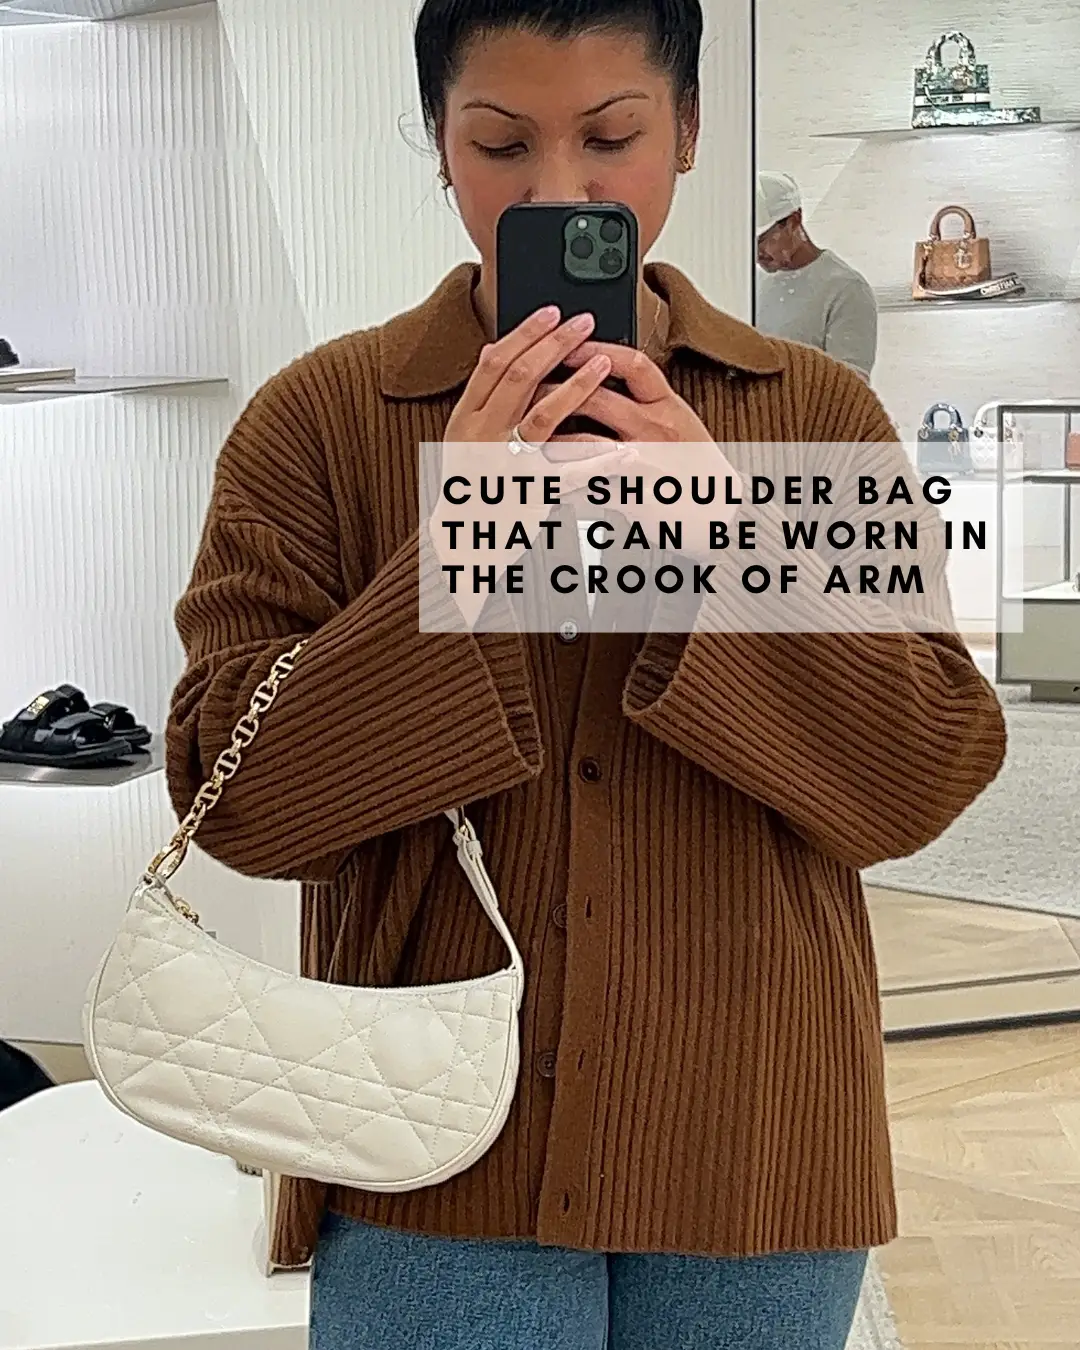 Dior Saddle Bag Review + Size/Price Comparison 